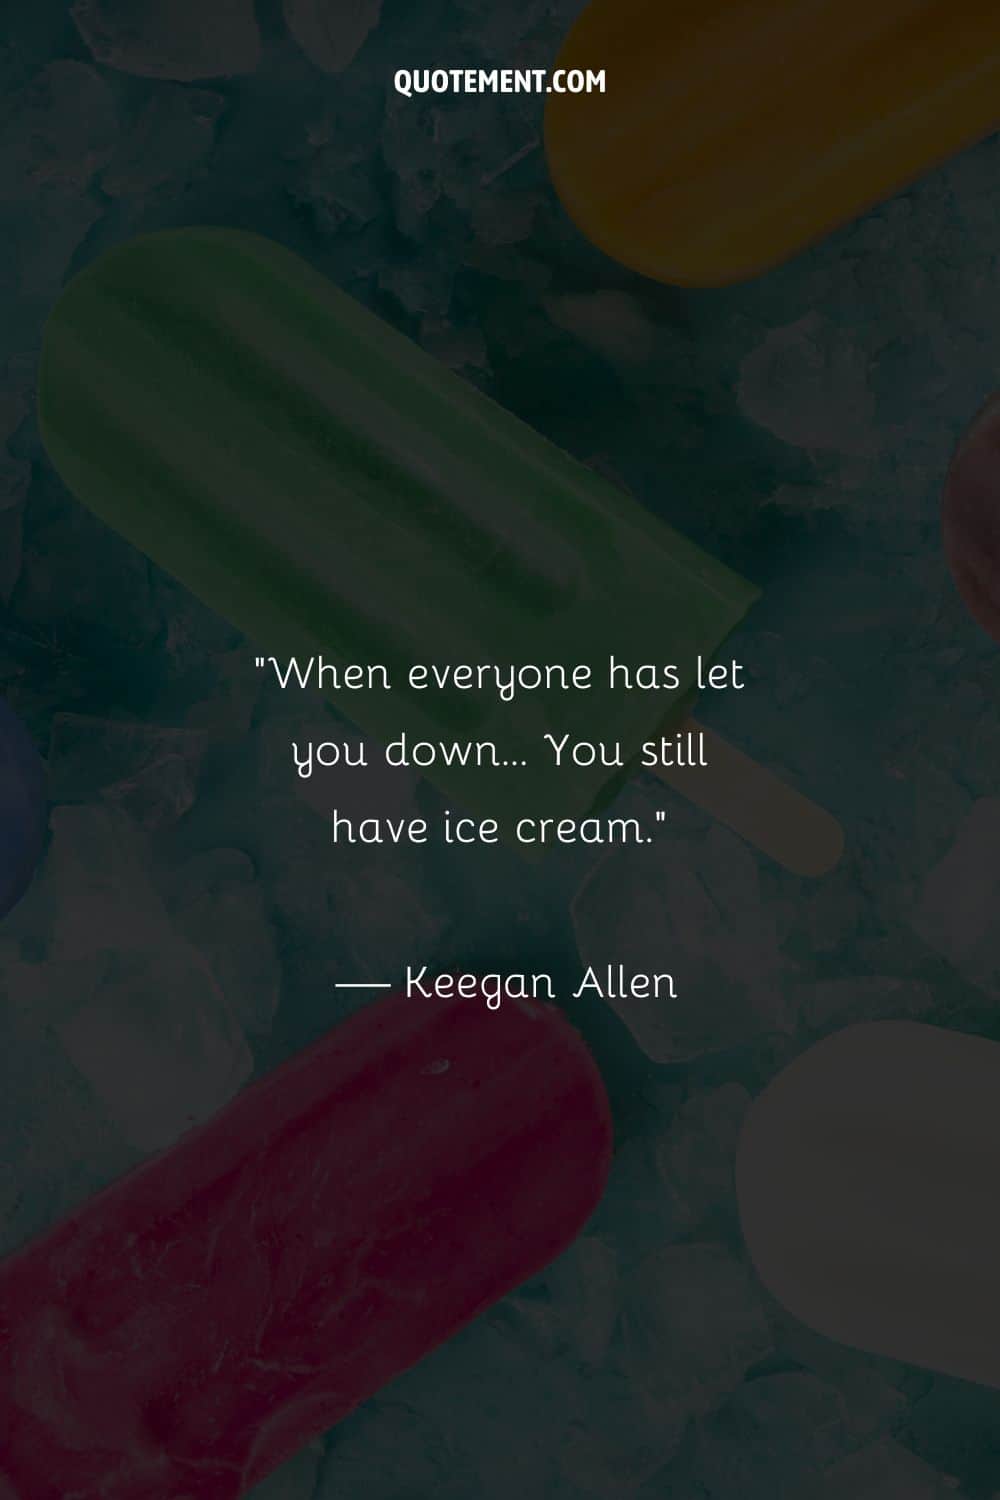 Ice creams in vibrant shades.
